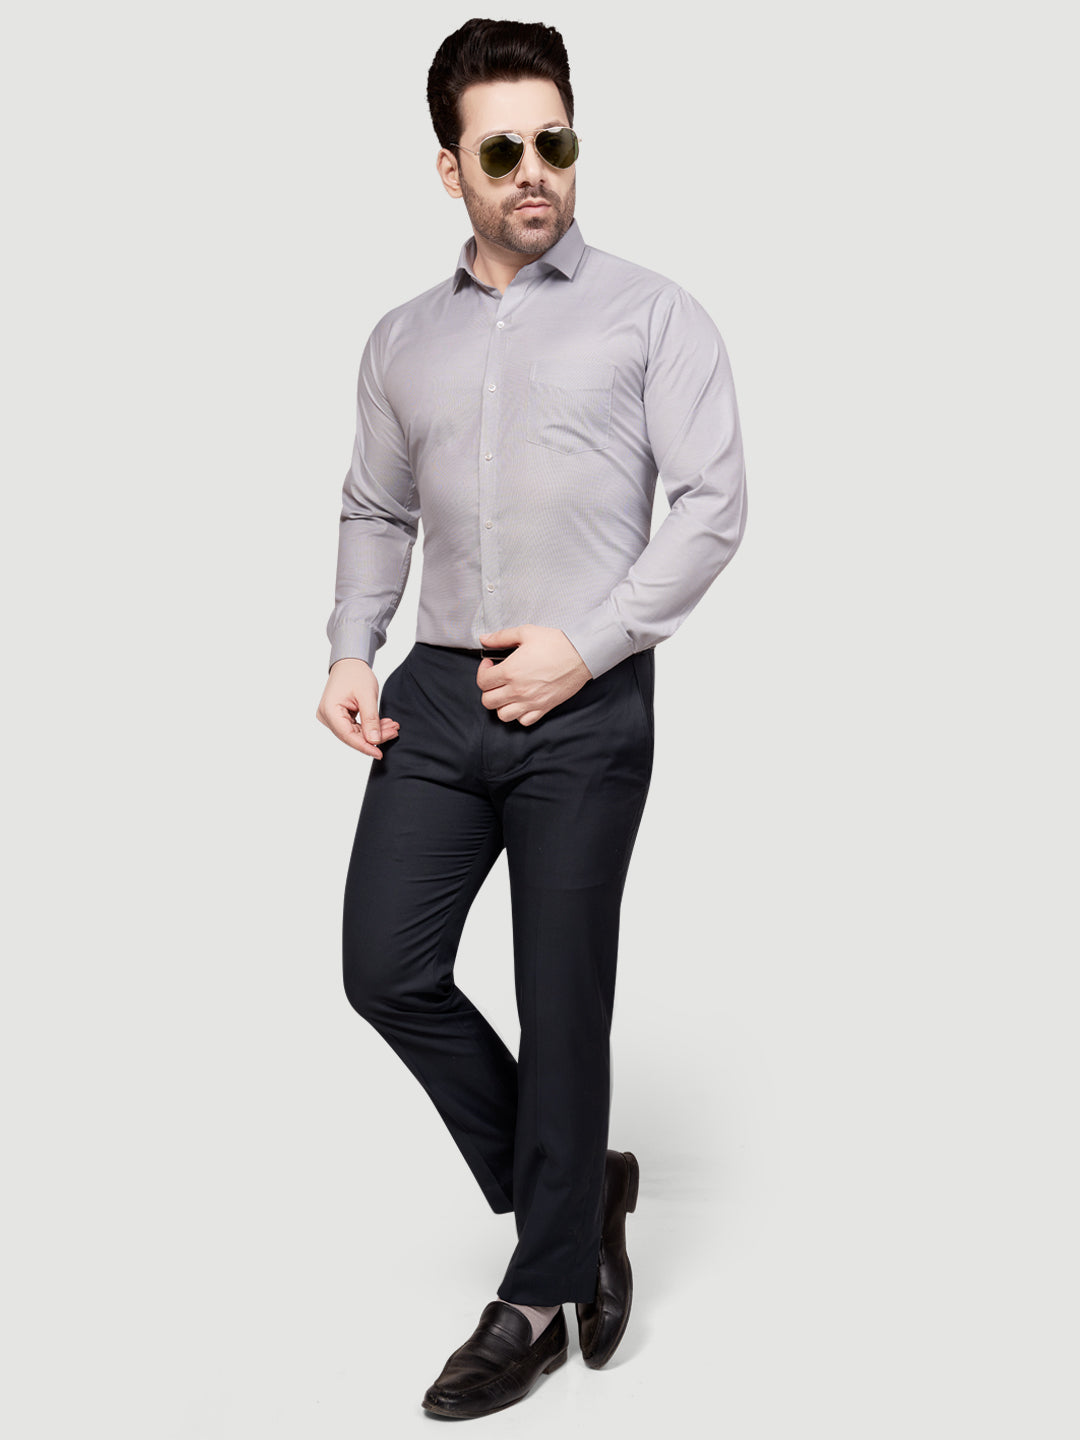 Black & White Men's Formal Shirt Grey